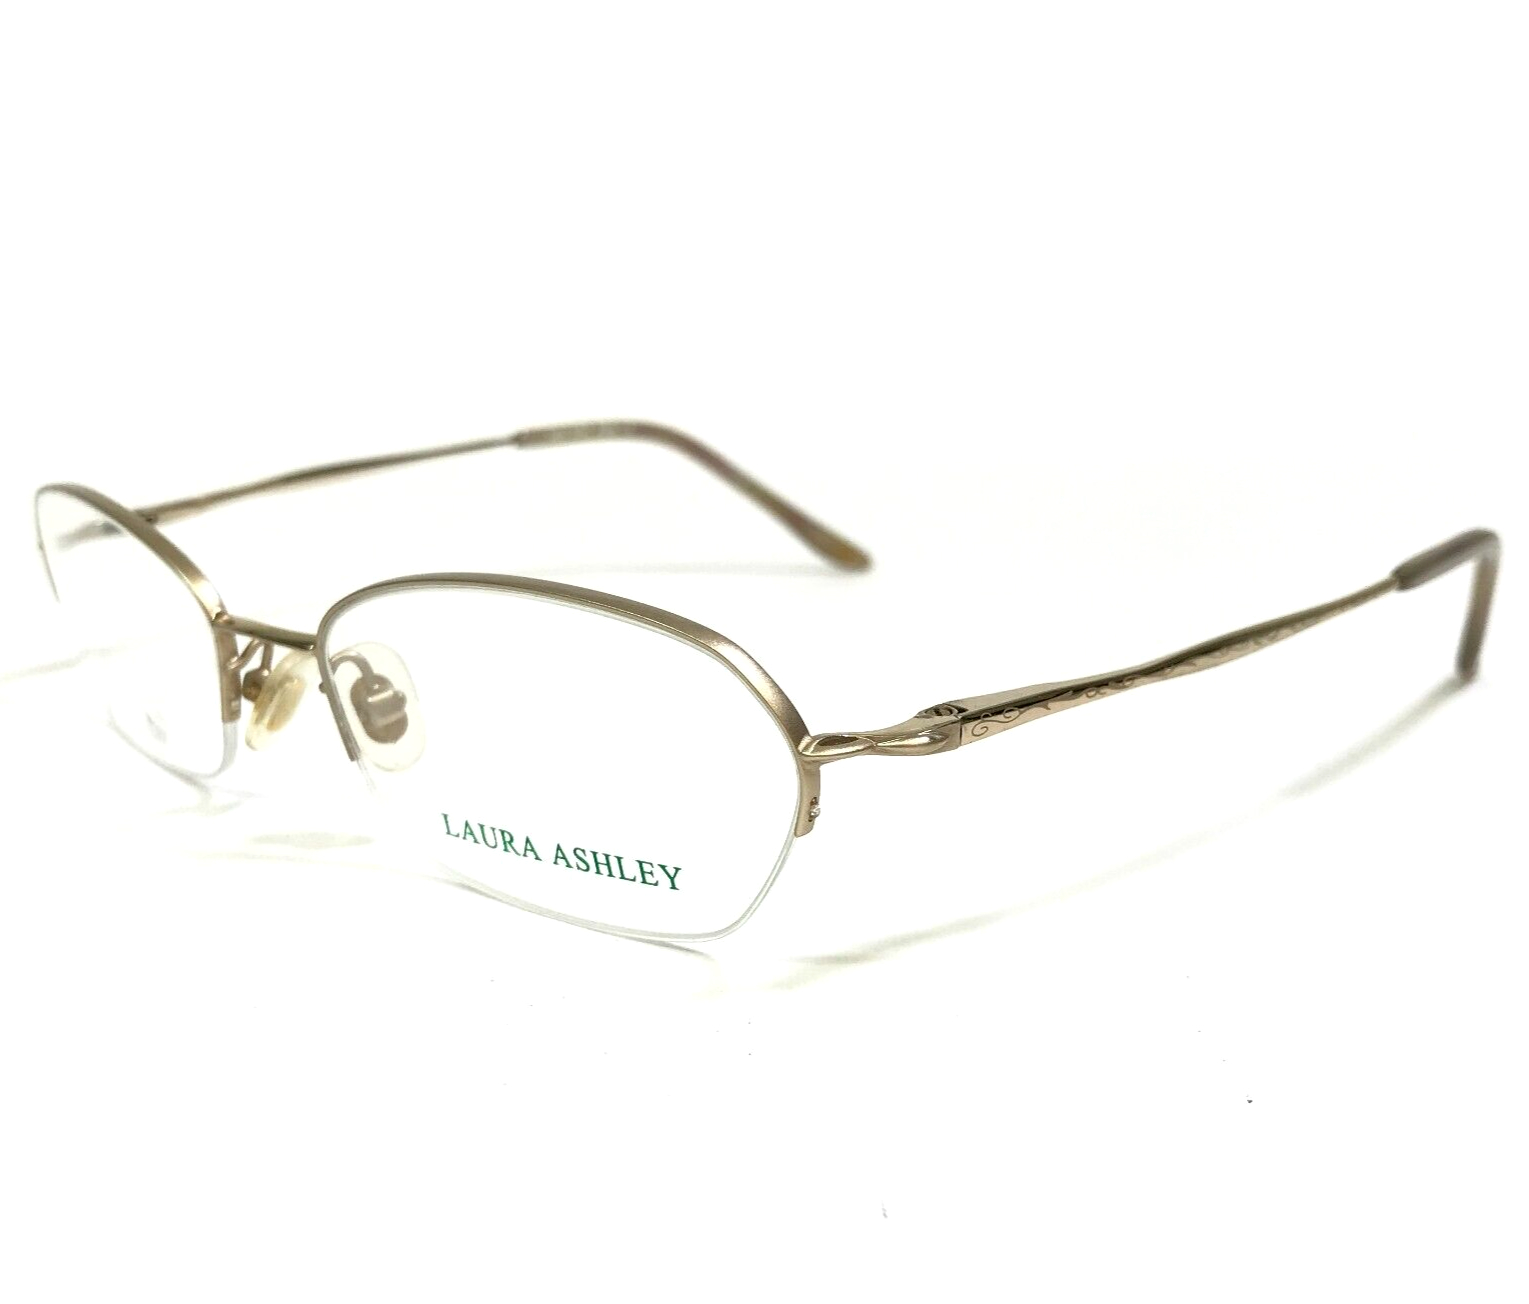 Primary image for Laura Ashley Eyeglasses Frames Blythe Gold Oval Cat Eye Half Wire Rim 52-16-135